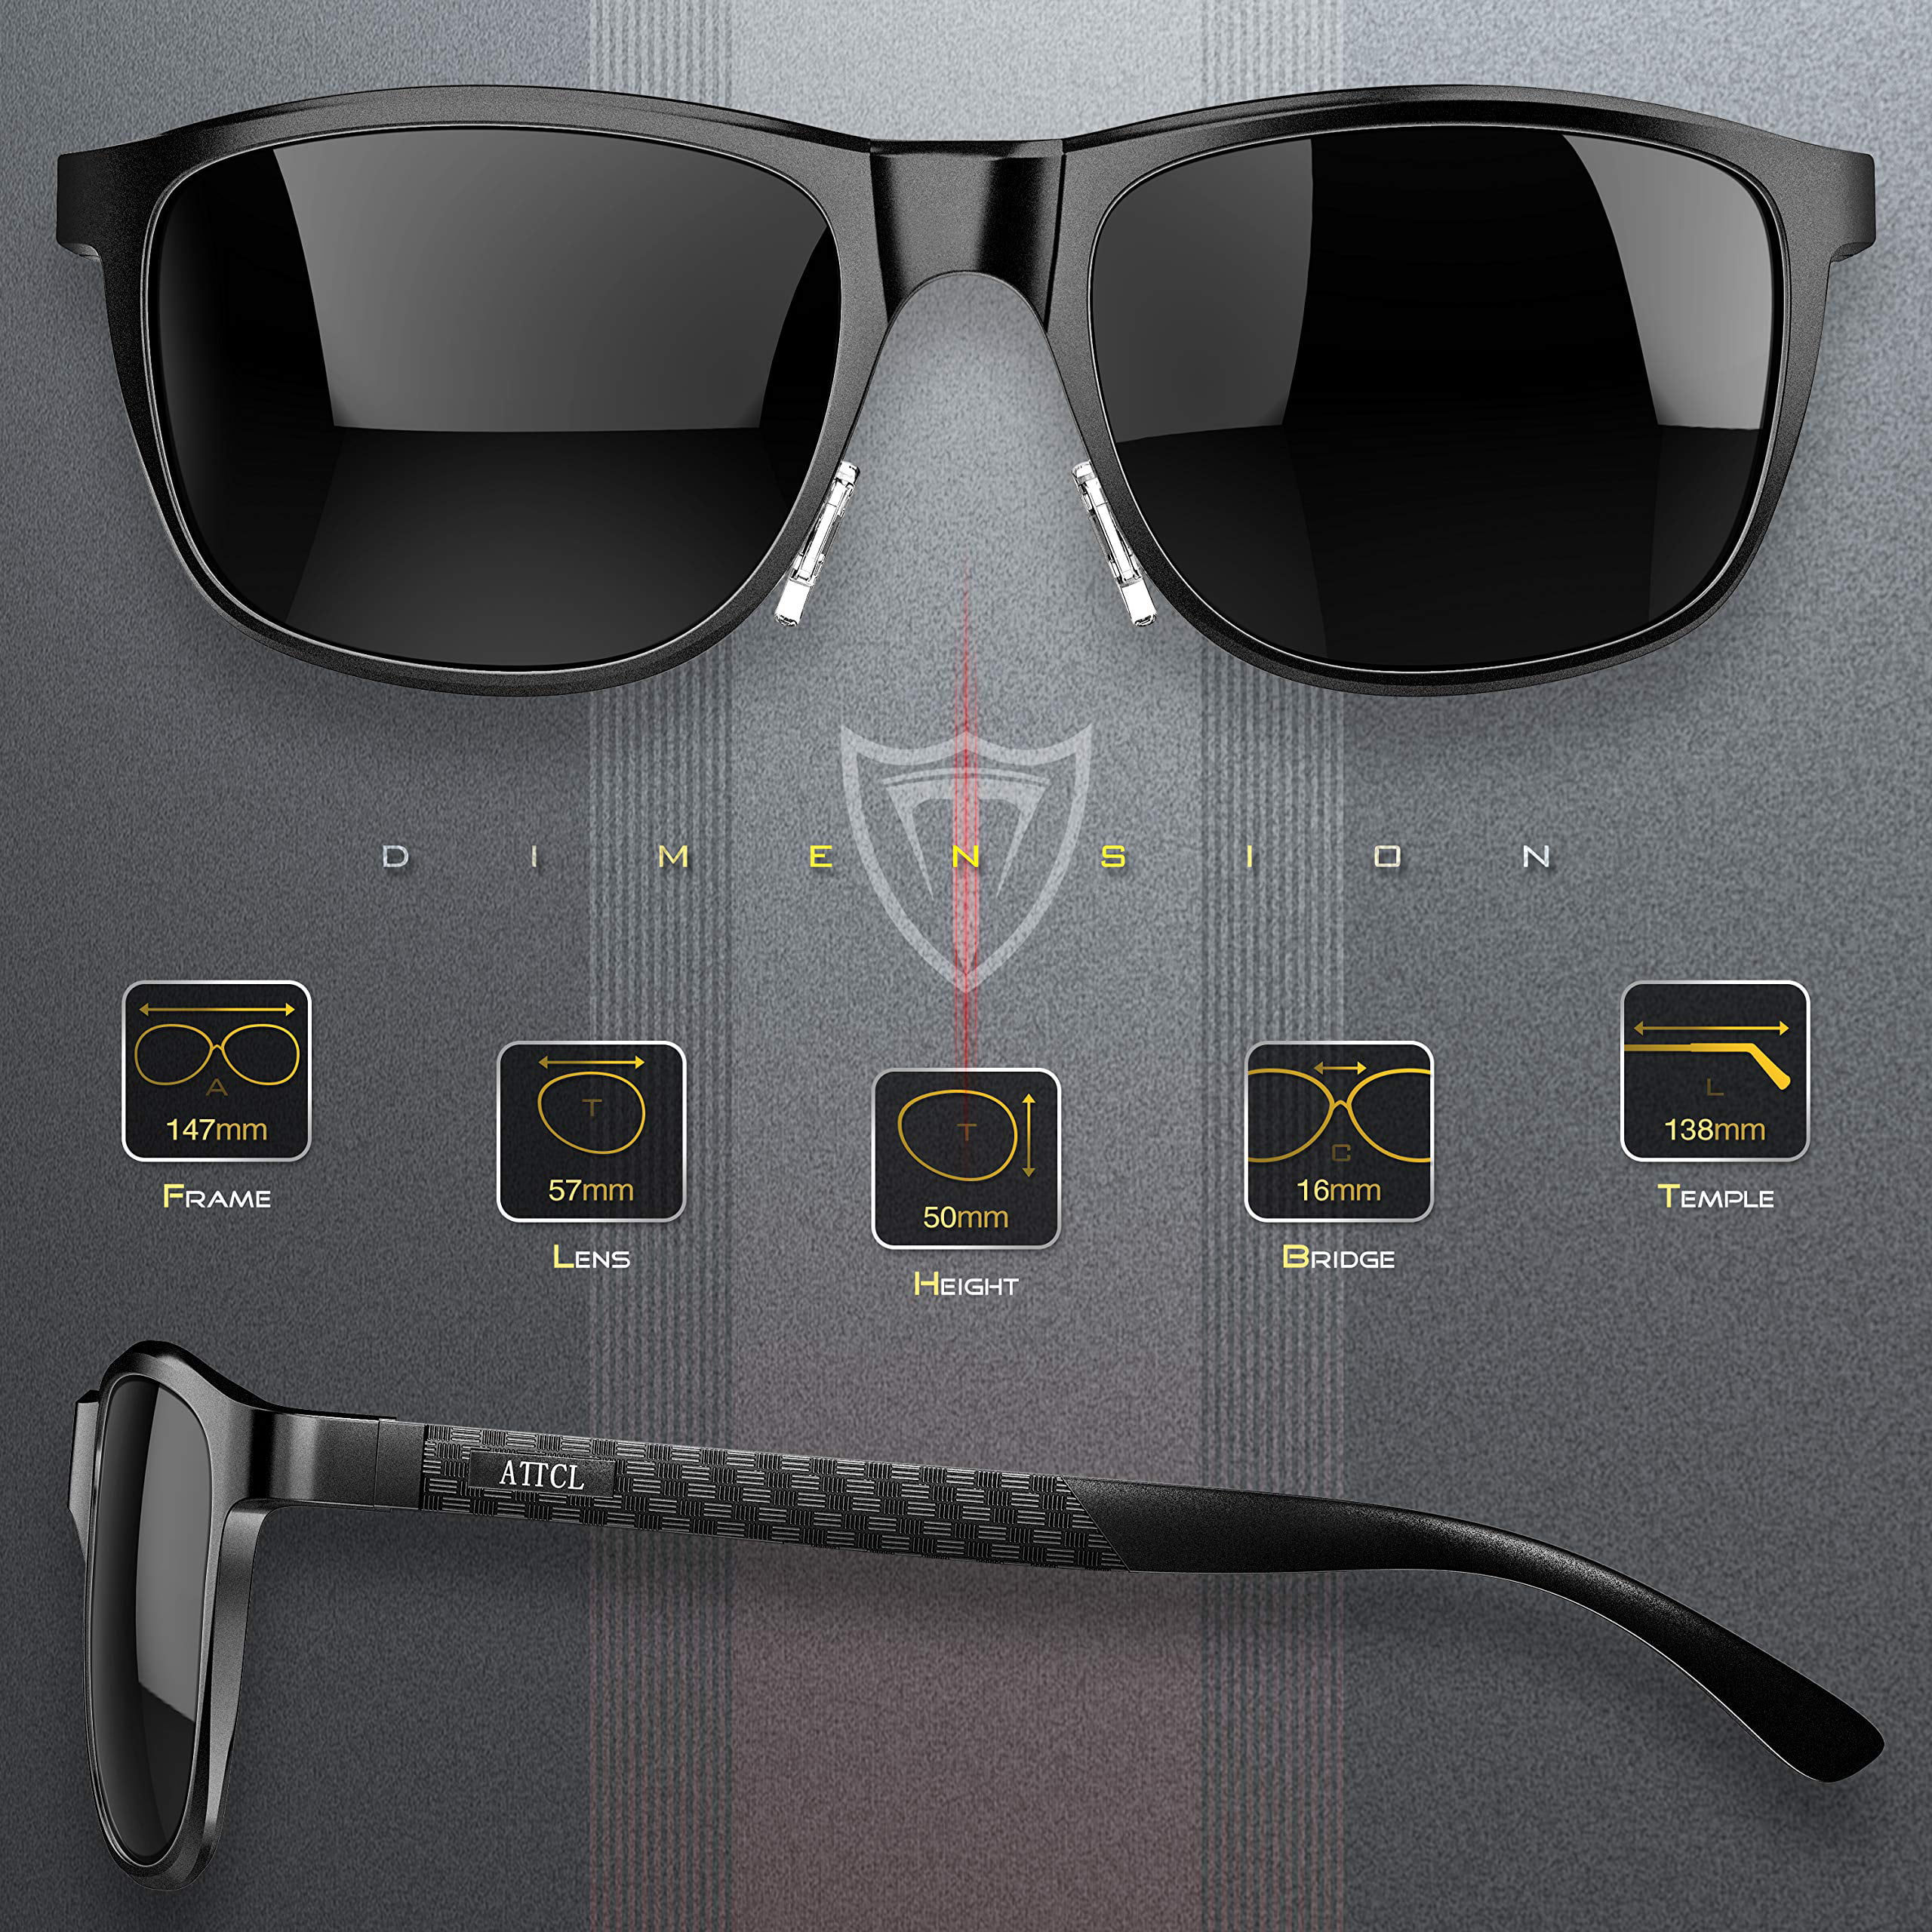 ATTCL Men's Retro Driving Polarized Sunglasses Man Al-Mg Metal Frame Ultra Light 